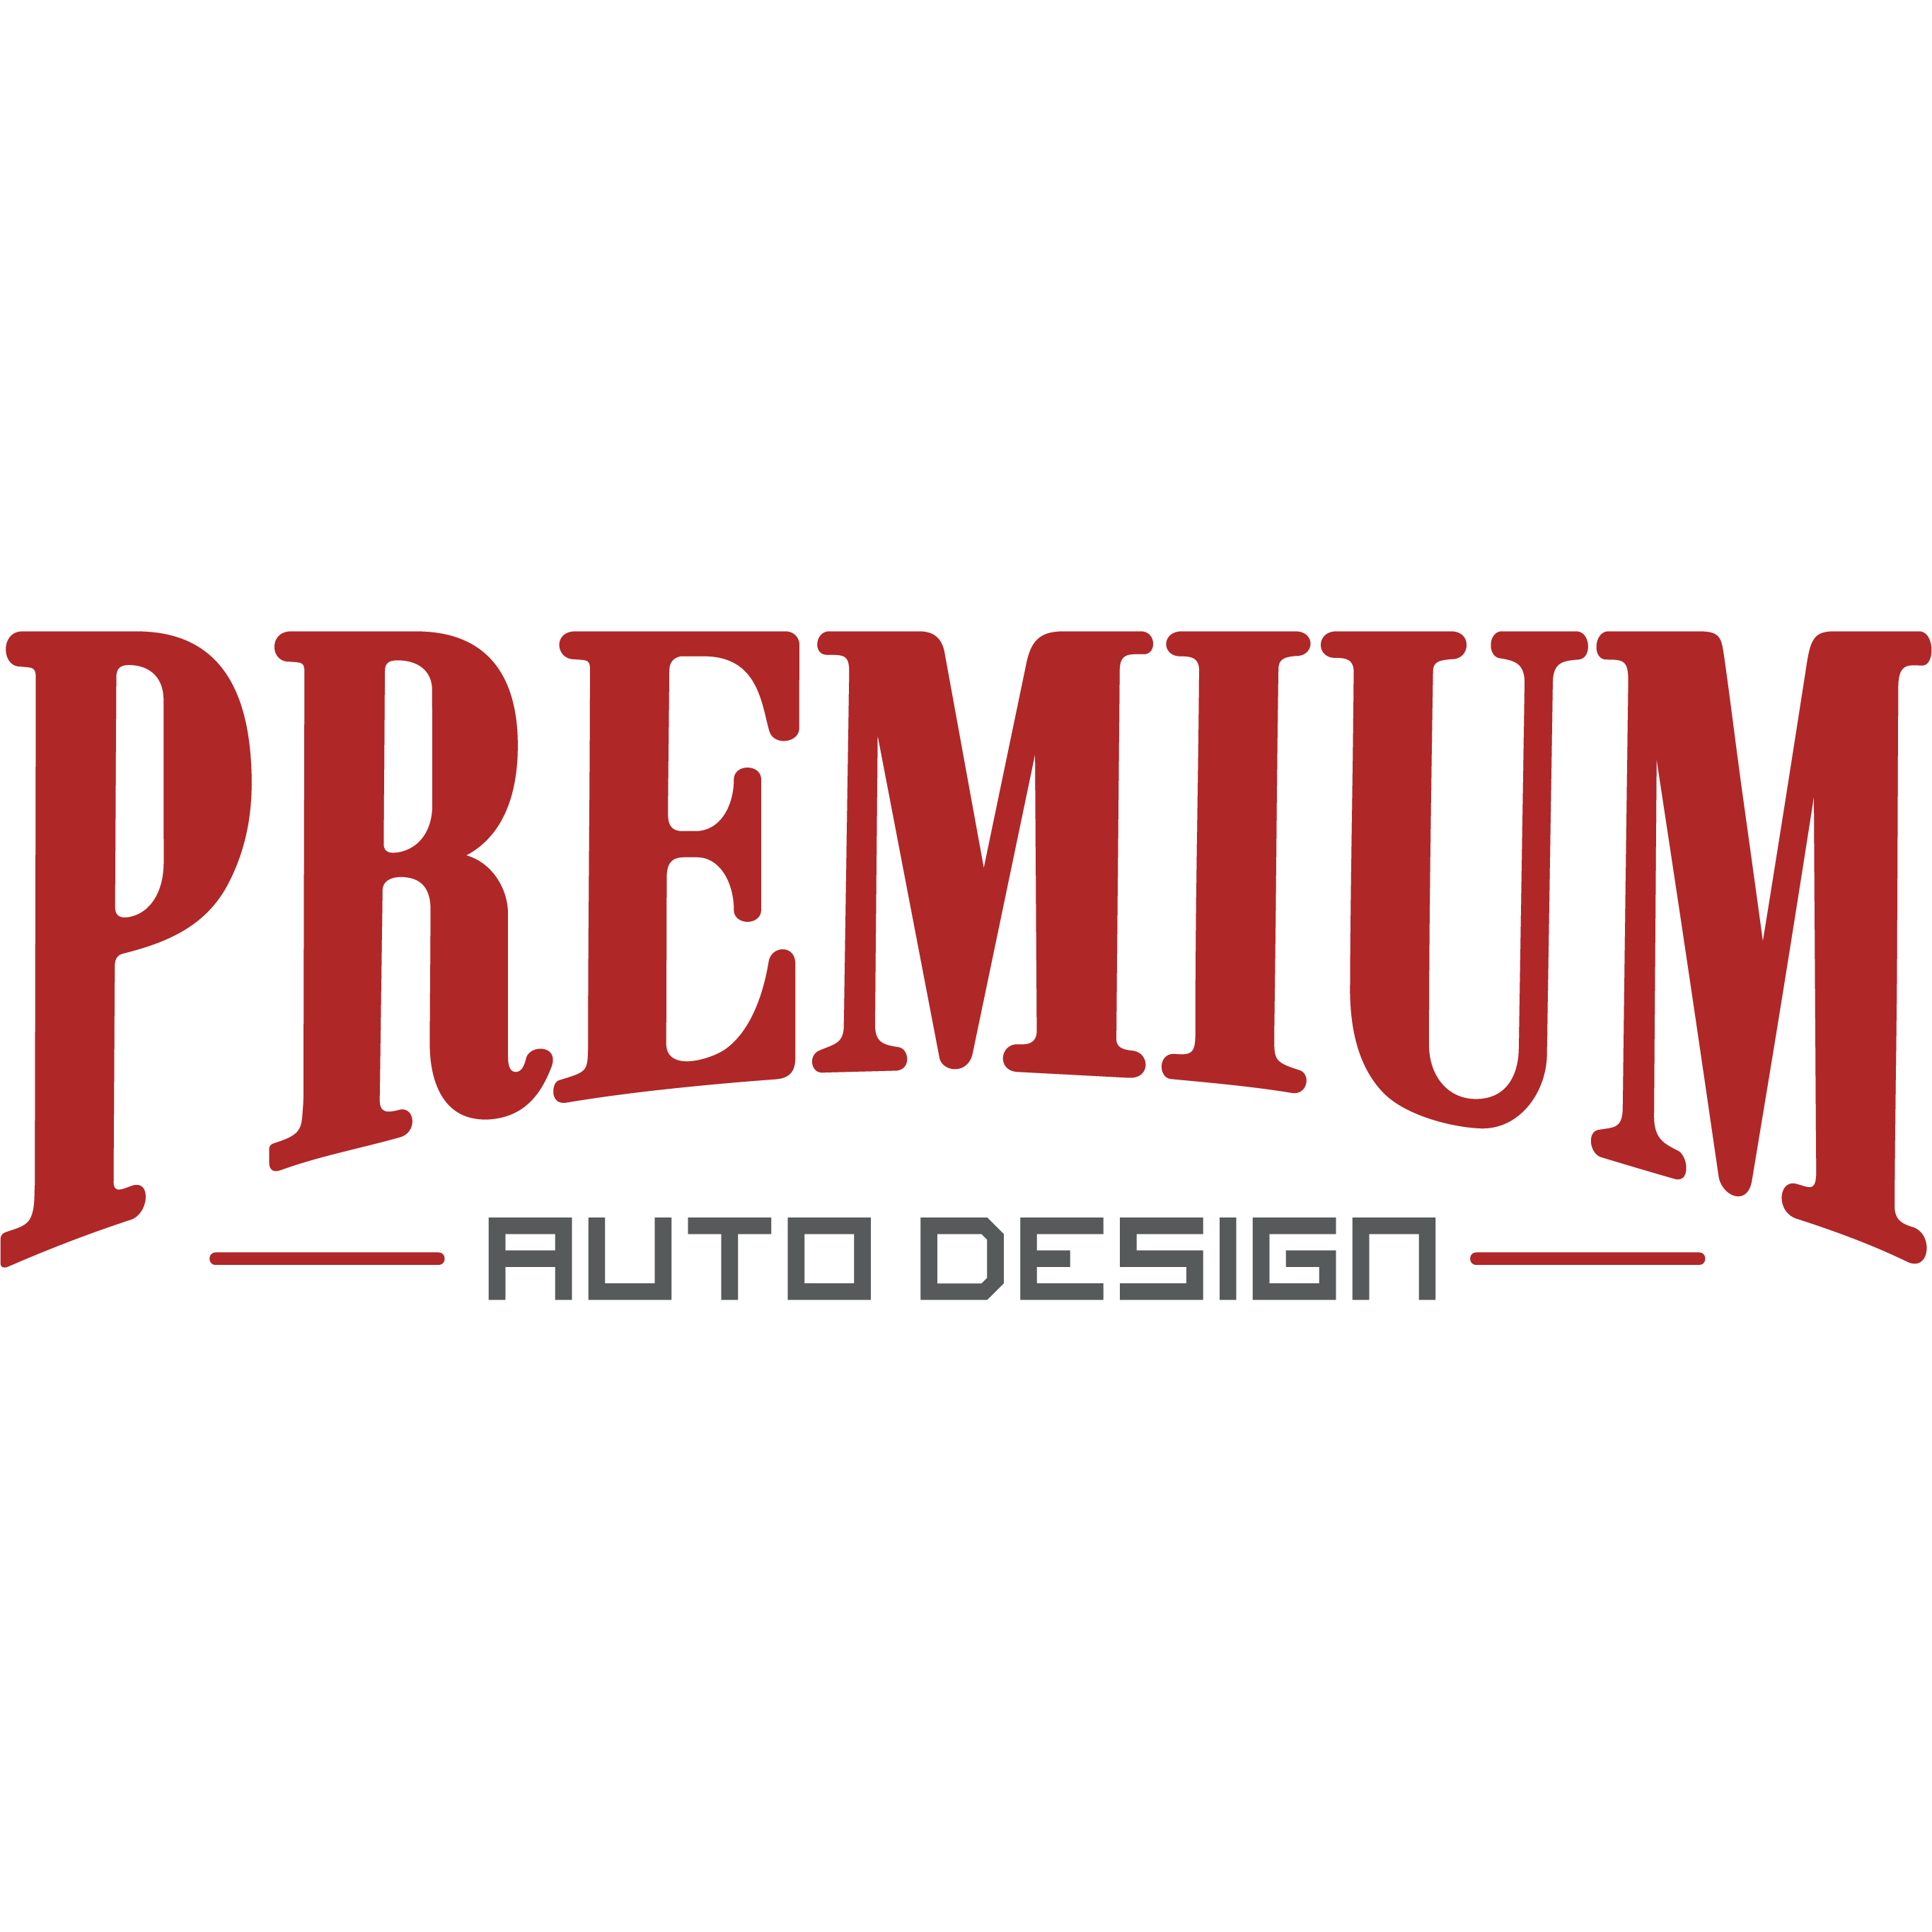 Premiumautodesign Logo